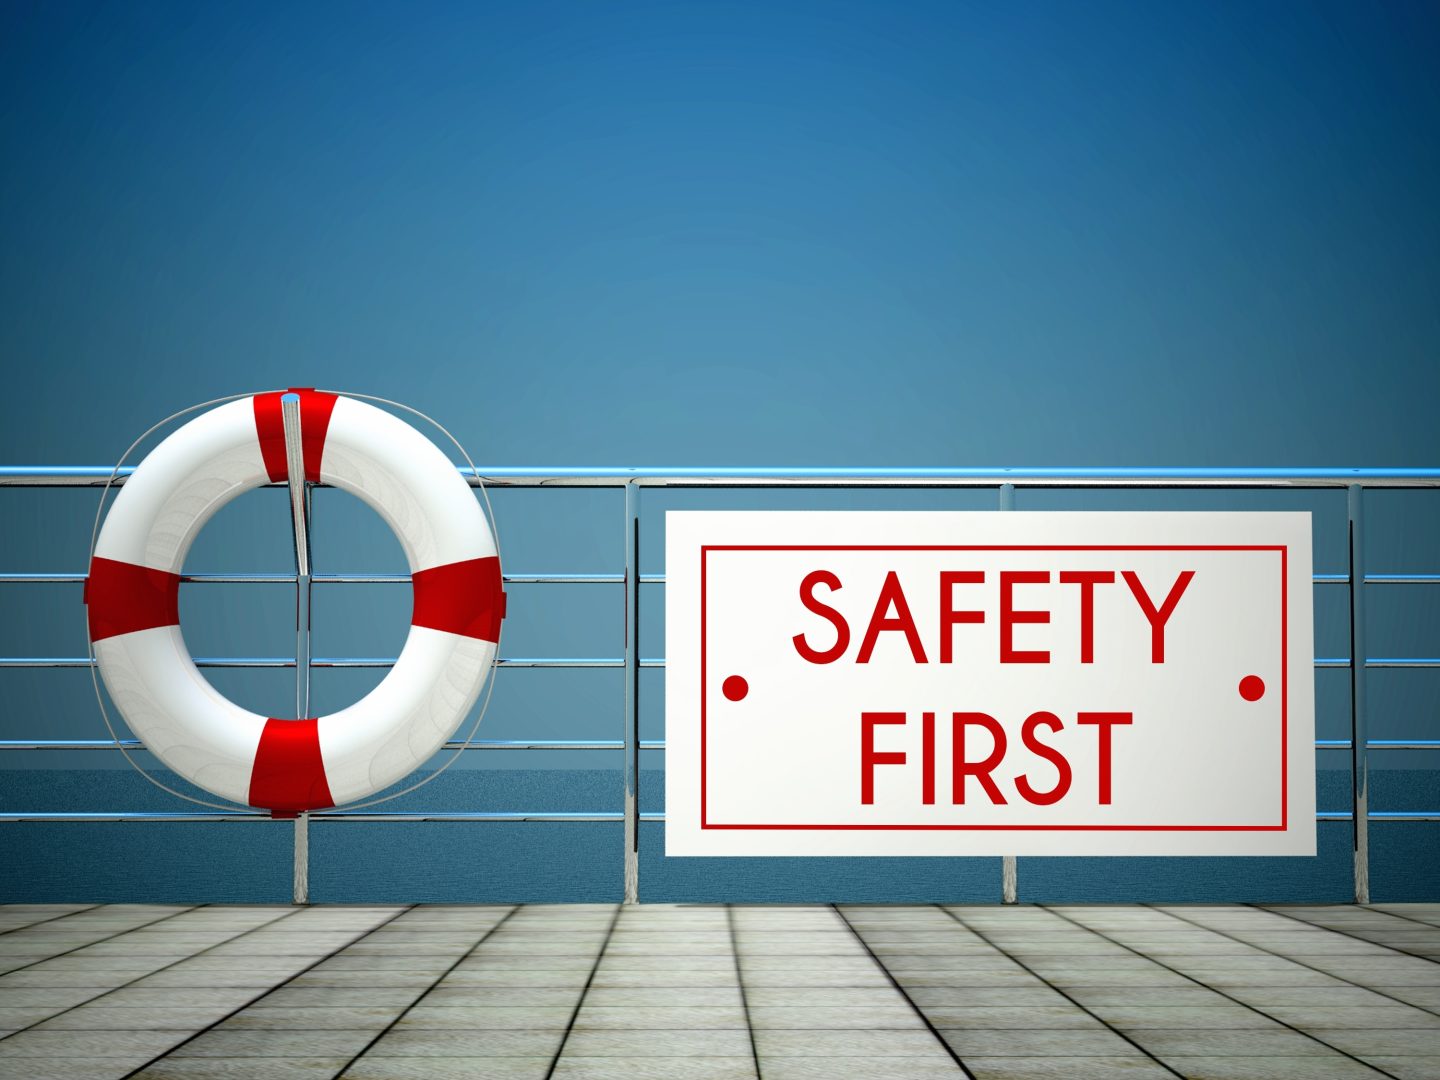 Bouée de sauvetage avec pancarte safety first